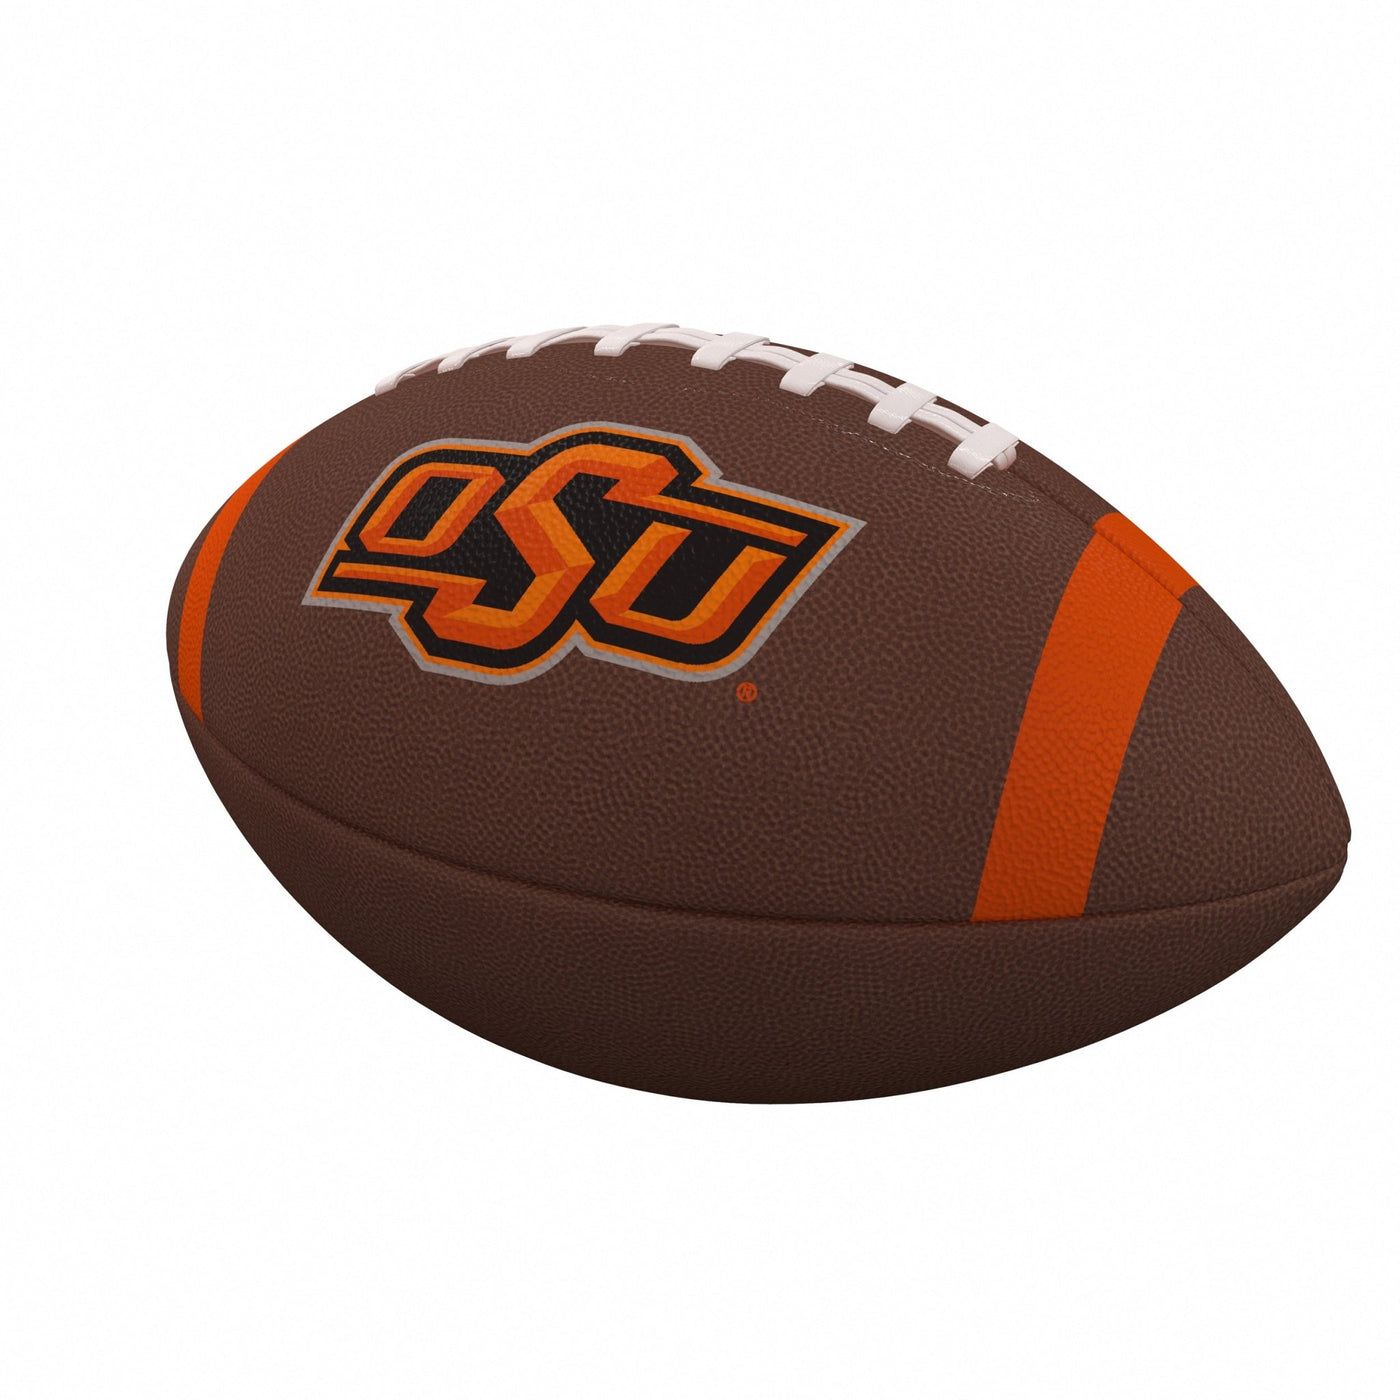 OK State Team Stripe Official-Size Composite Football - Logo Brands